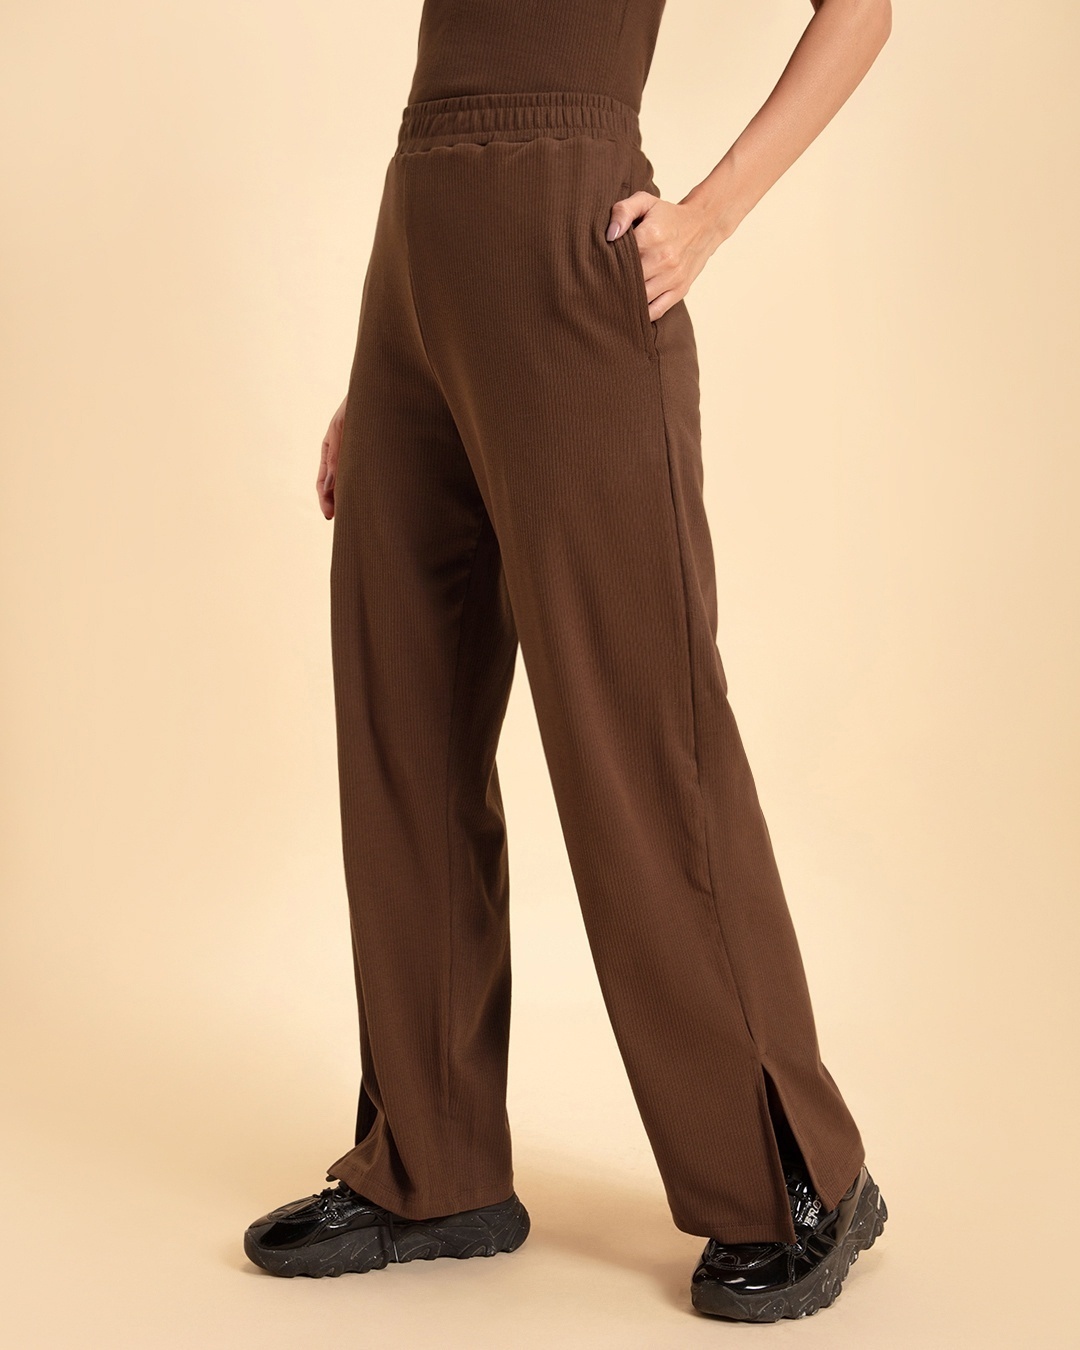 Buy QUECY Womens High Waist Boyfriends Straight Leg Jeans Denim Pants  Trousers Coffee Brown L at Amazonin